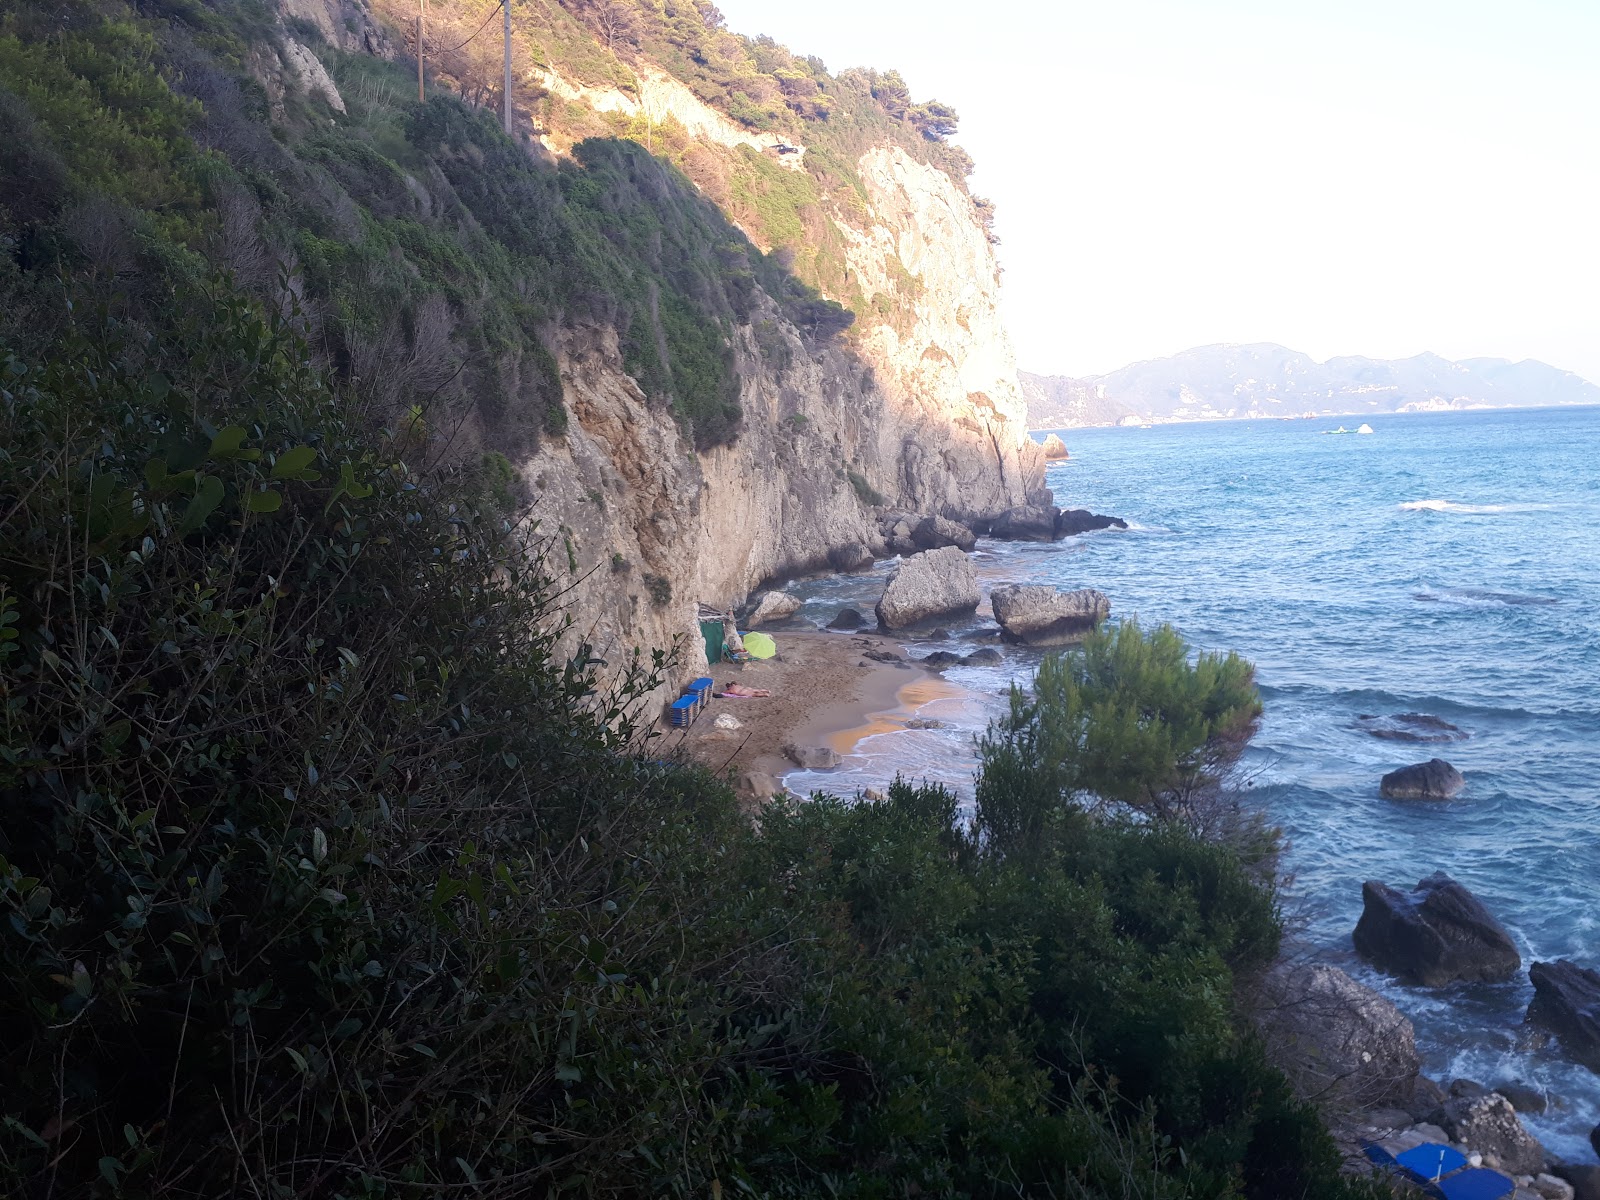 Fotografija Myrtiotissa beach nahaja se v naravnem okolju